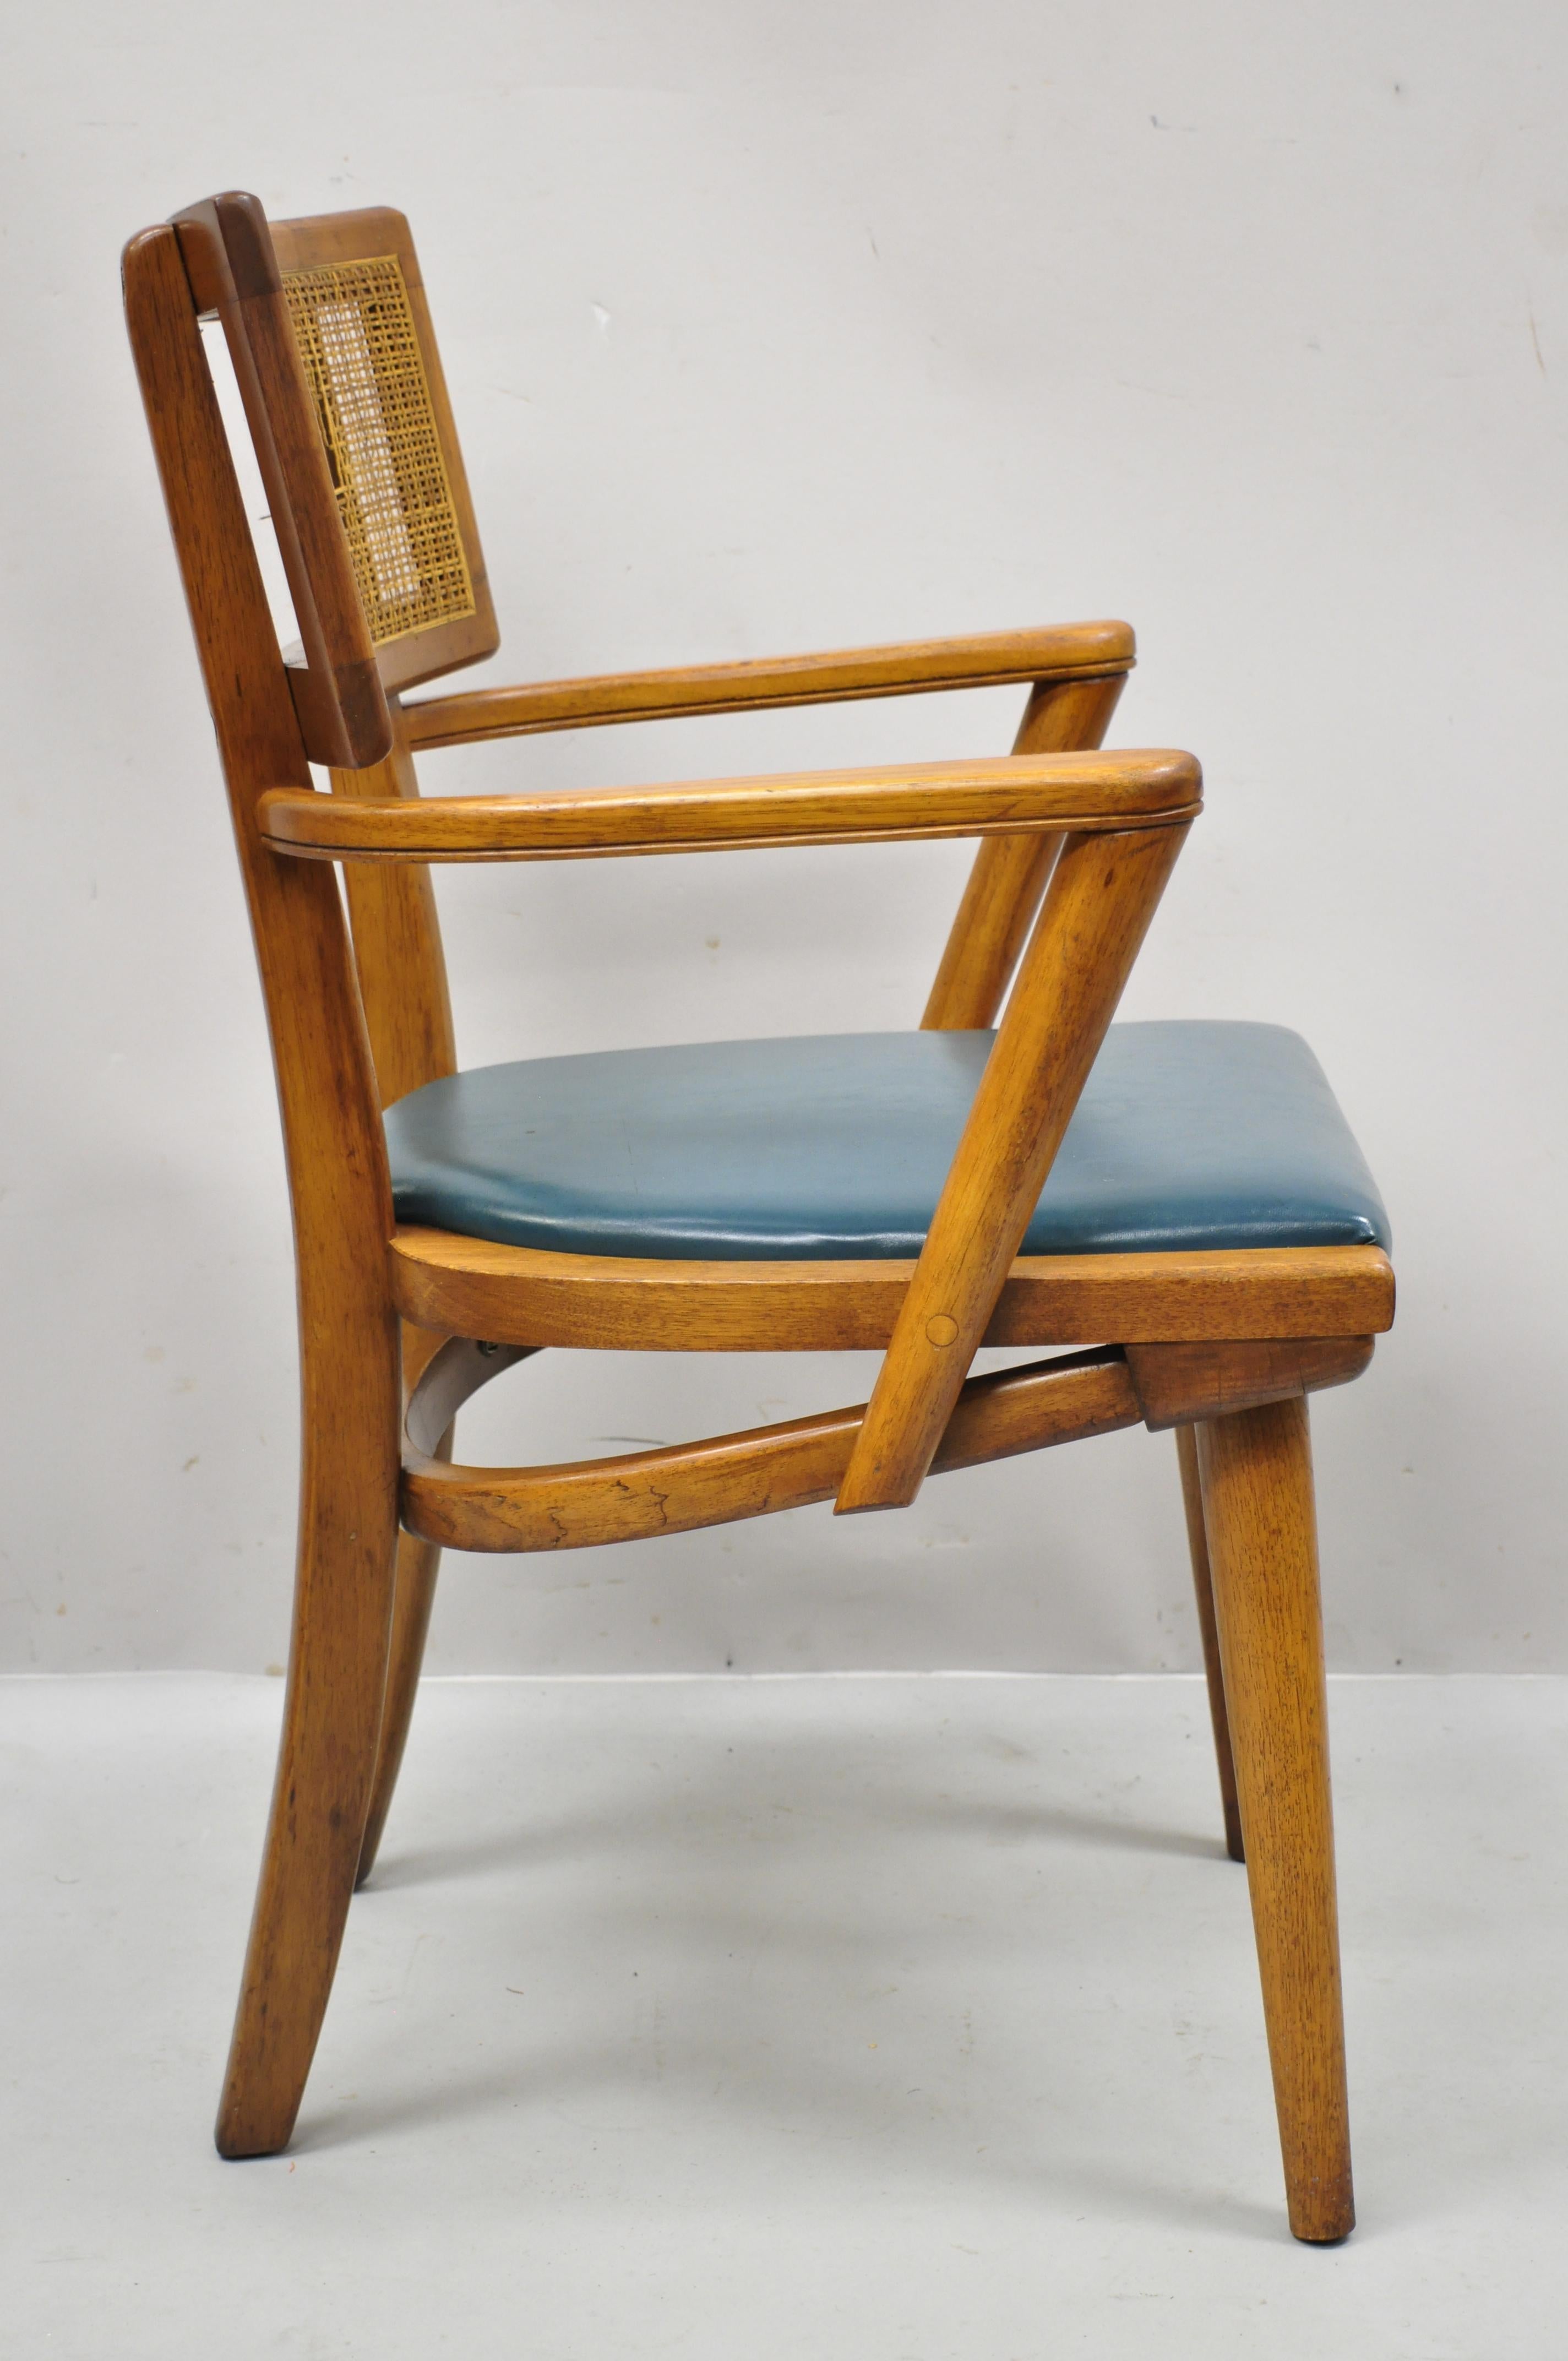 Mid-Century Modern The Boling Changebak Chair Walnut Cane Back Mid Century by Boling Chair Co. 'A'